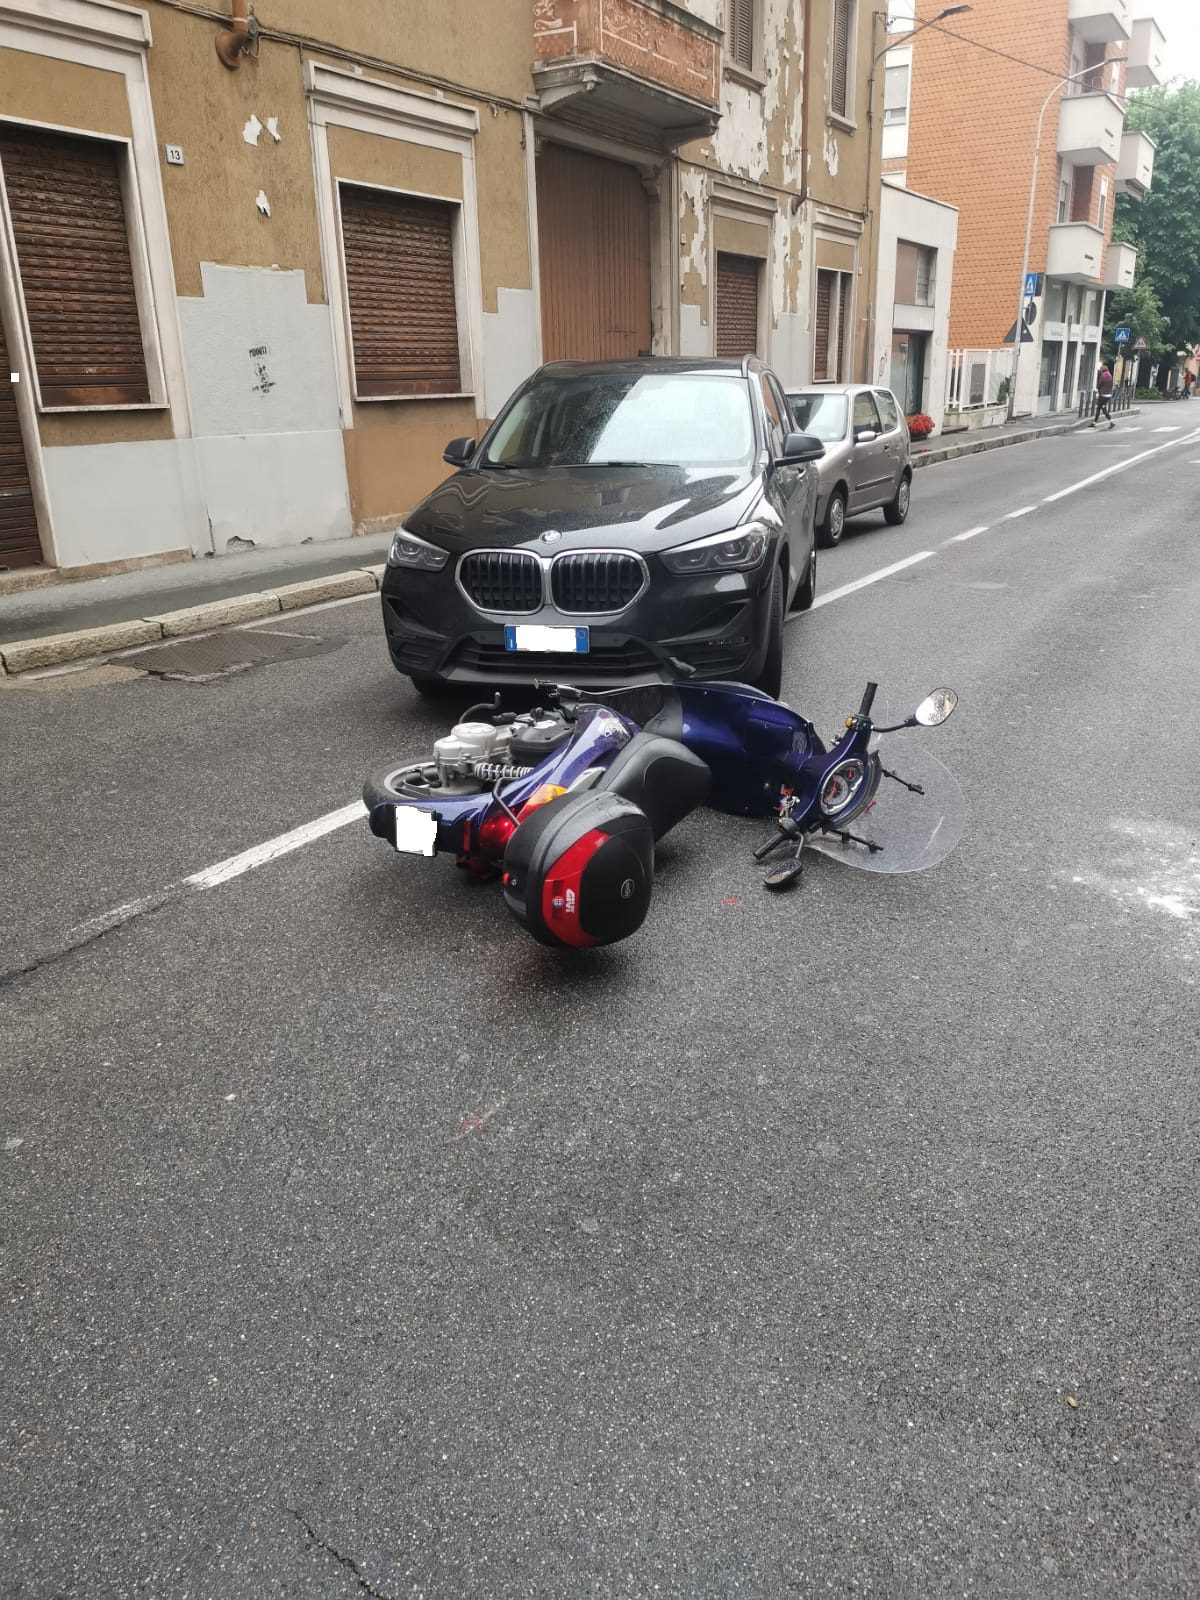 20220507 incidente ambulanza scooter2